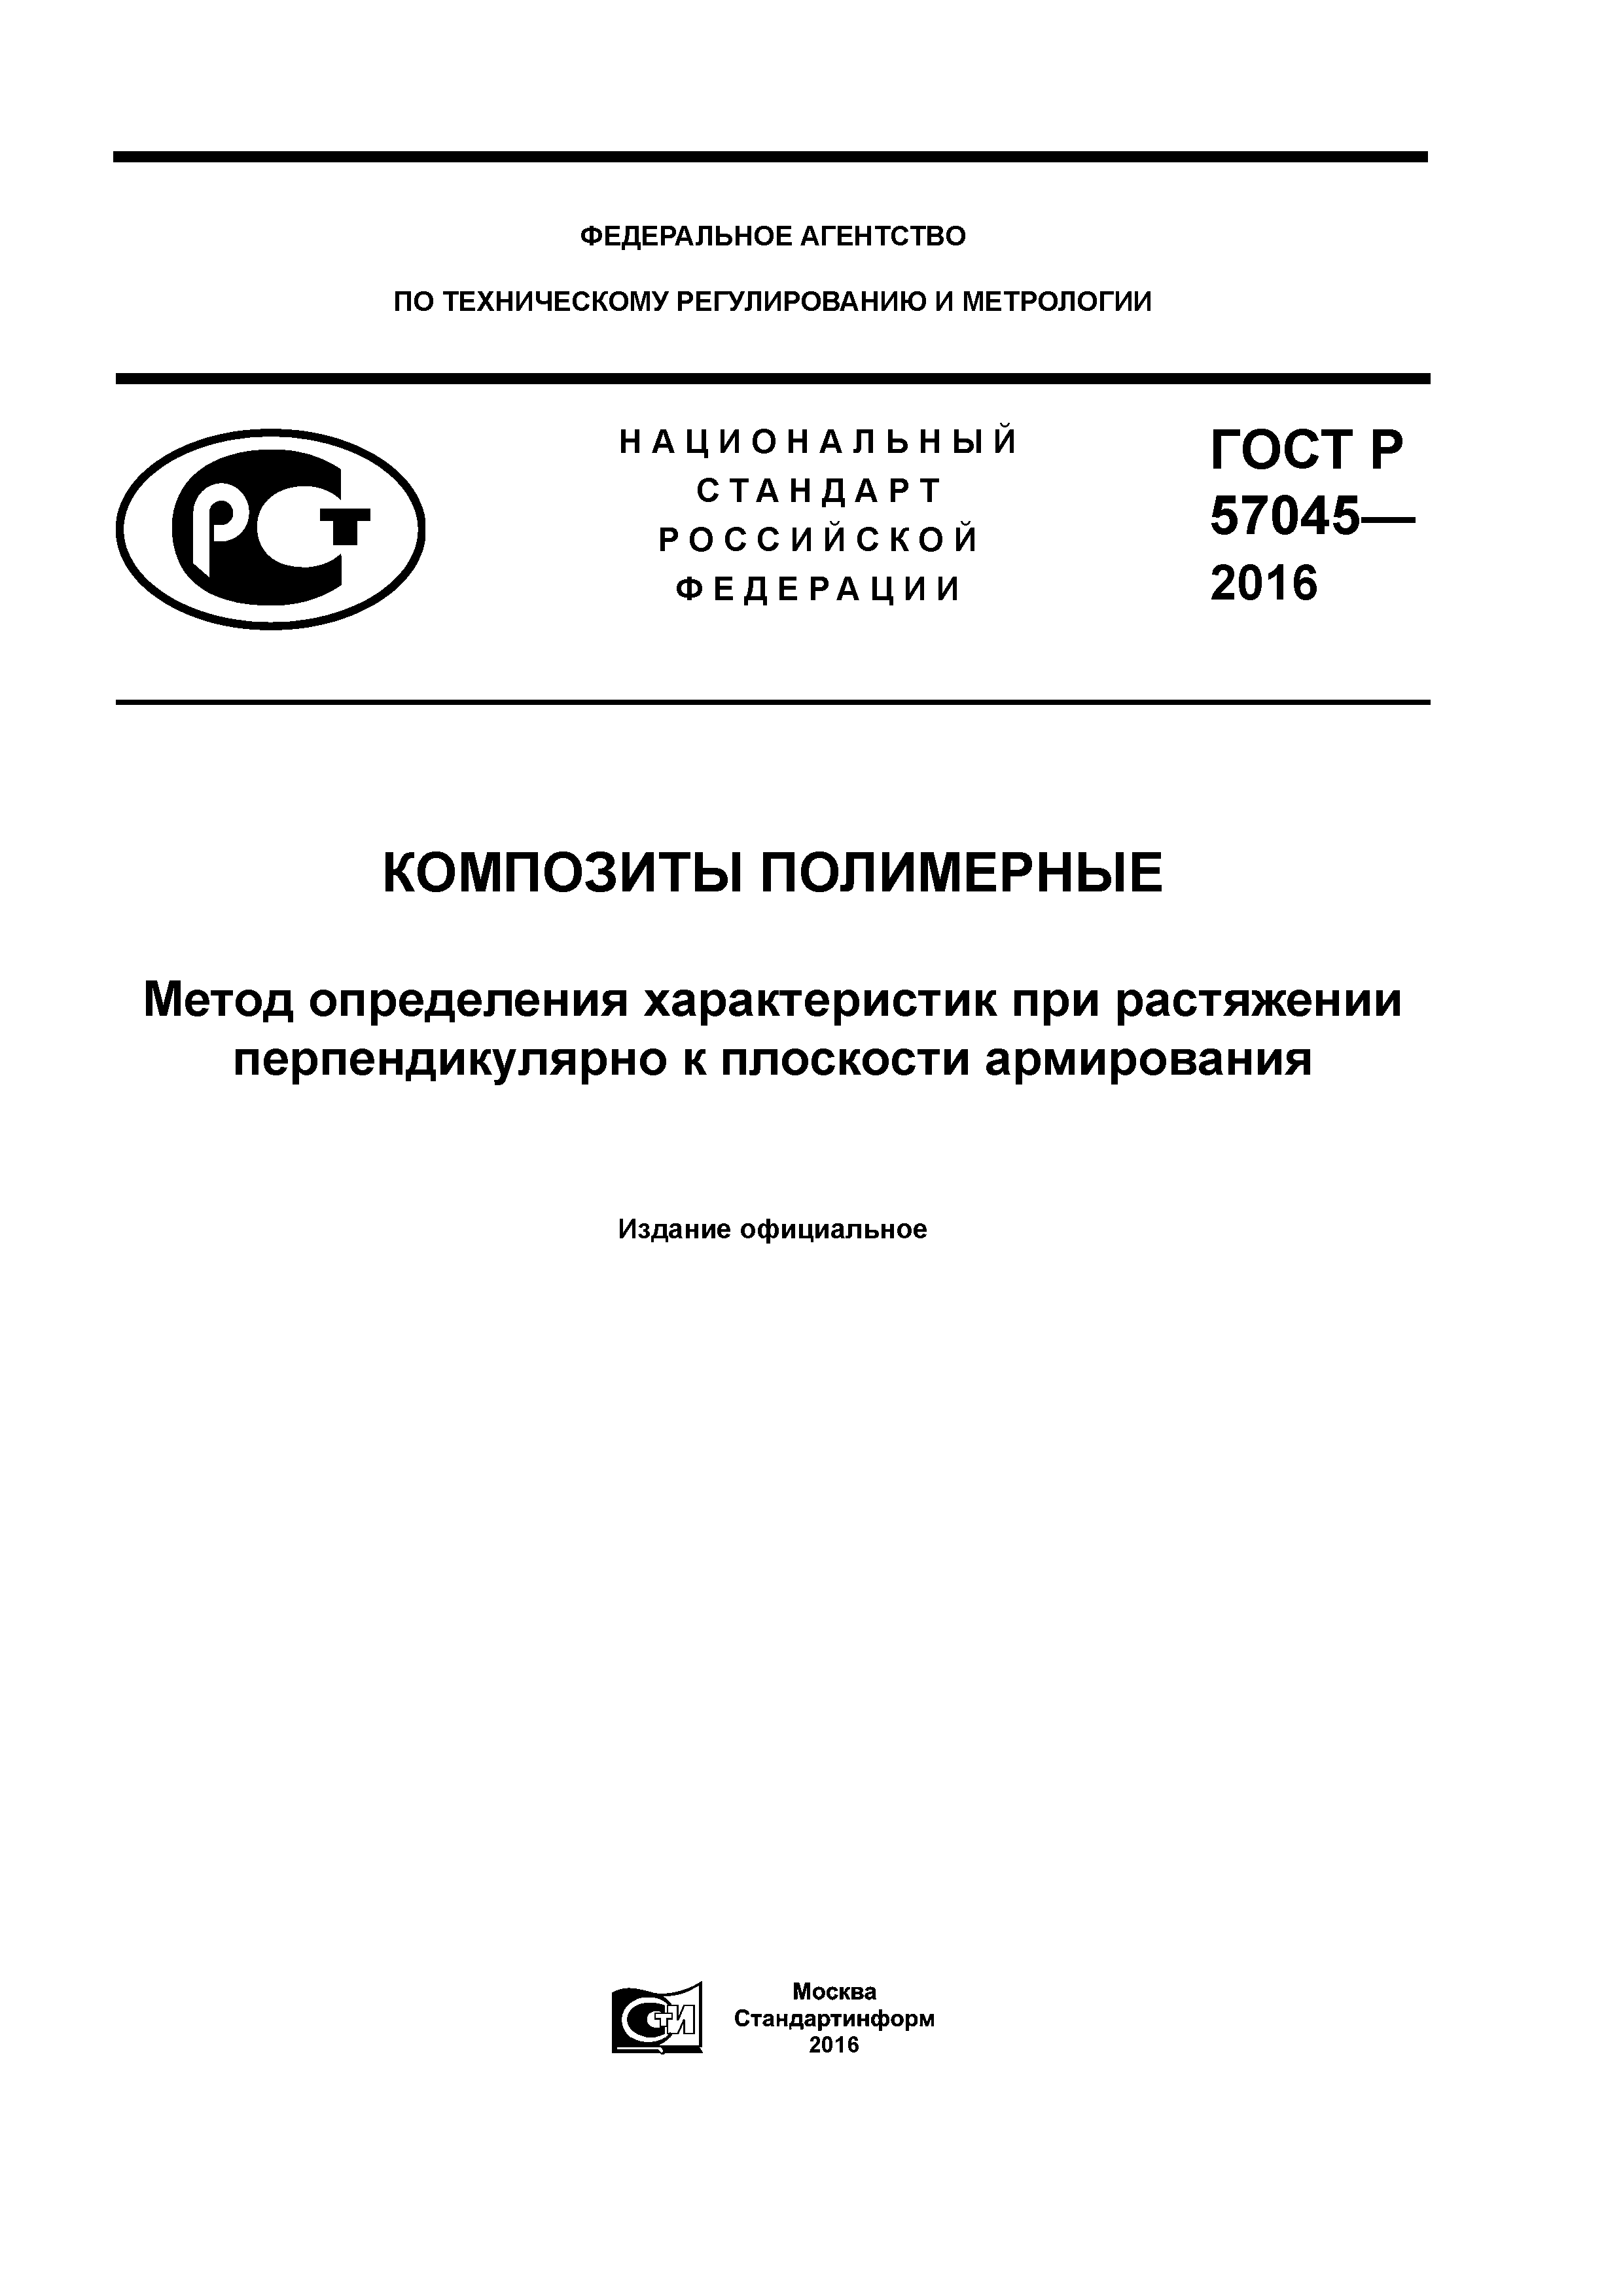 ГОСТ Р 57045-2016